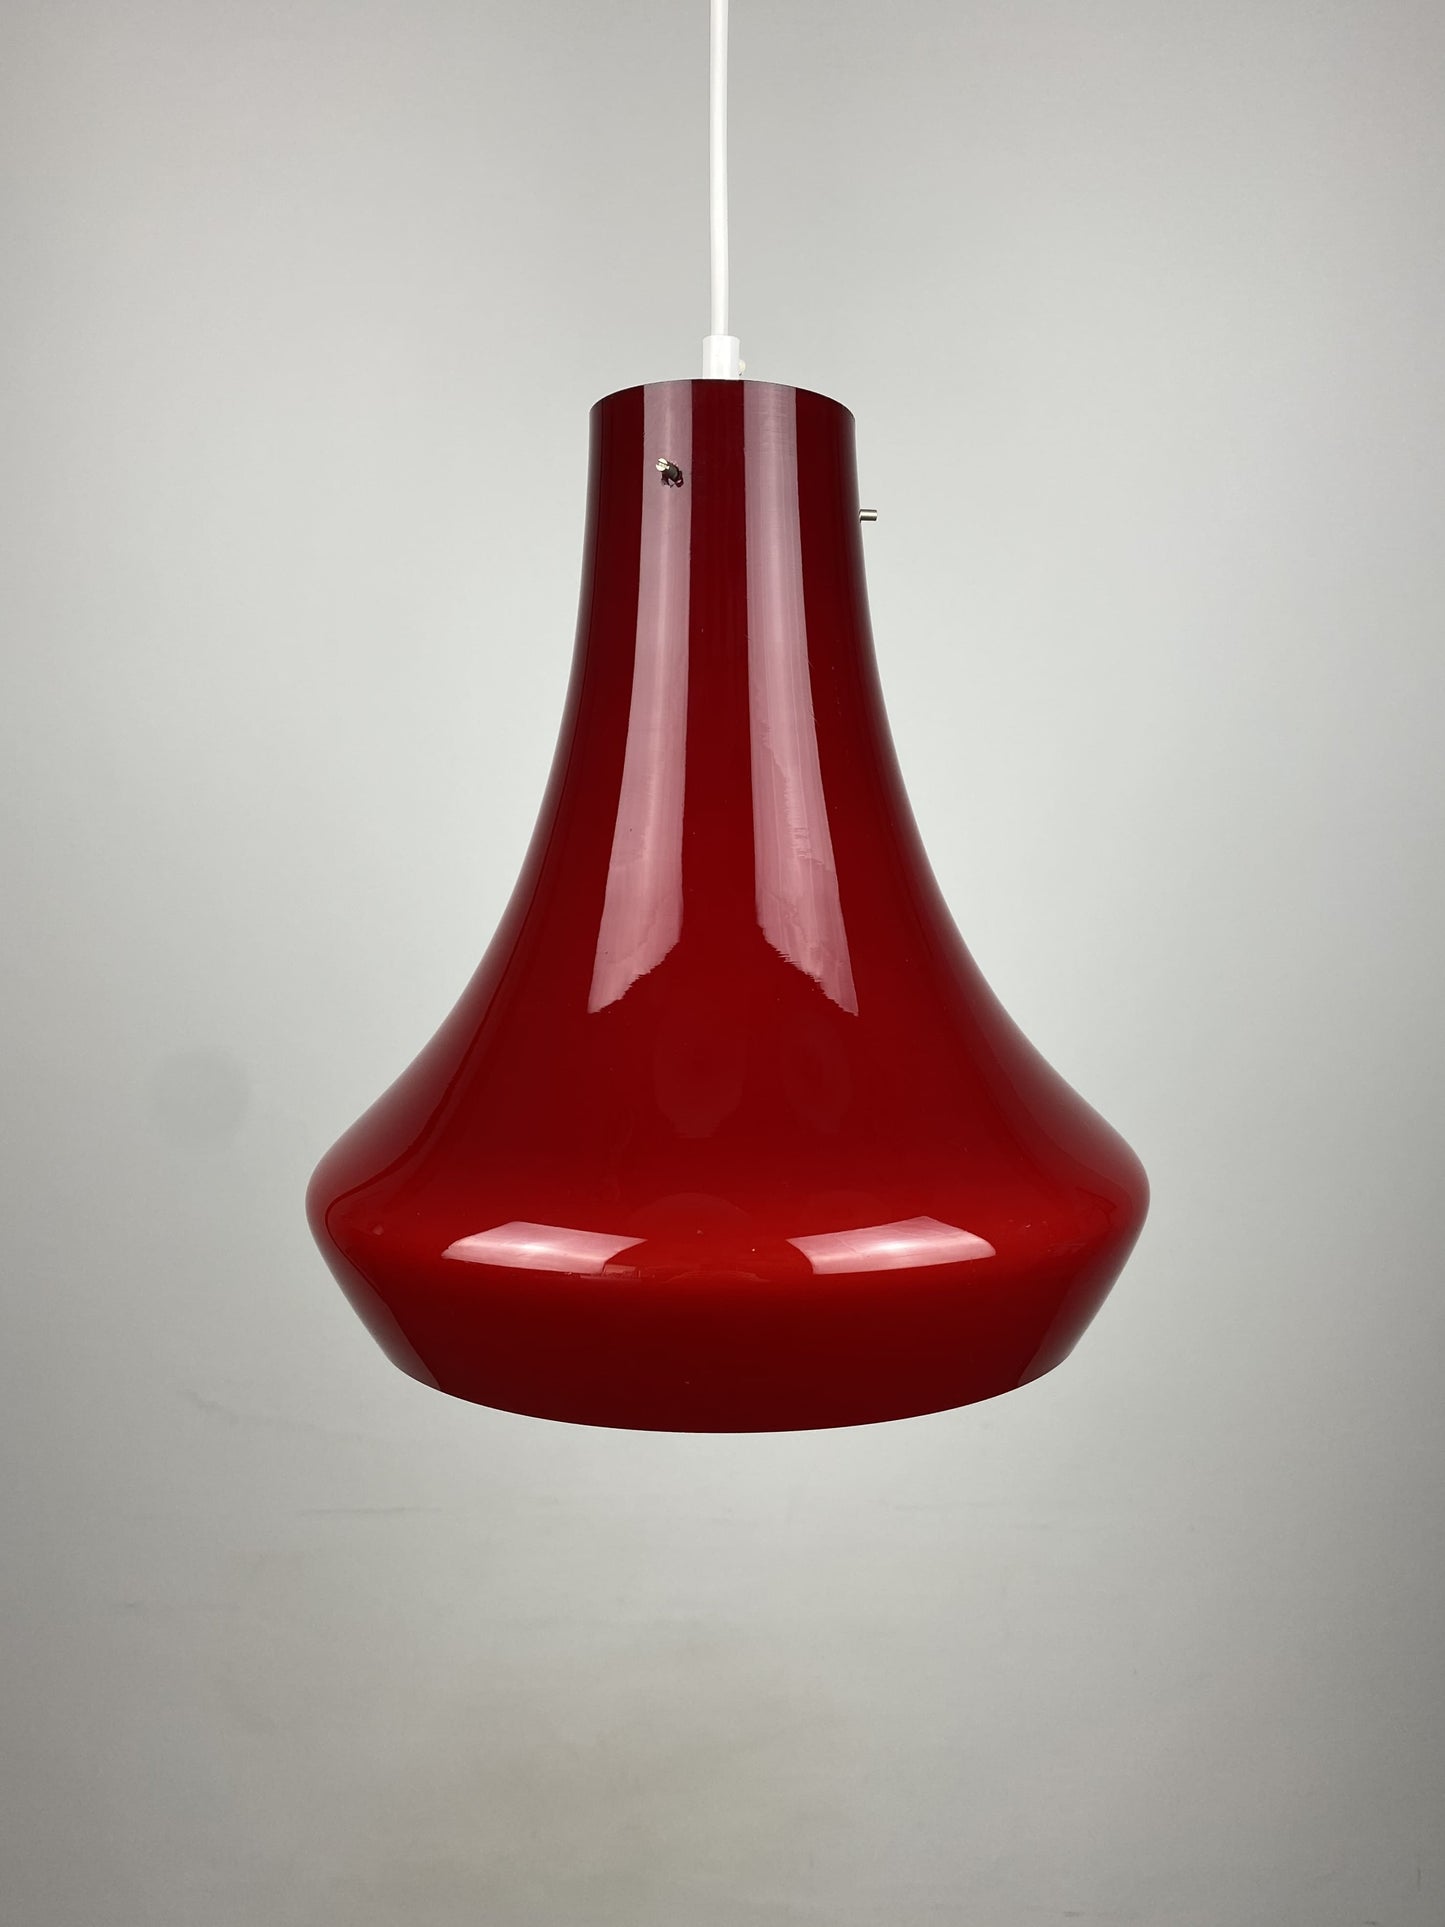 Cherry red trumpet shaped glass pendant light 1970